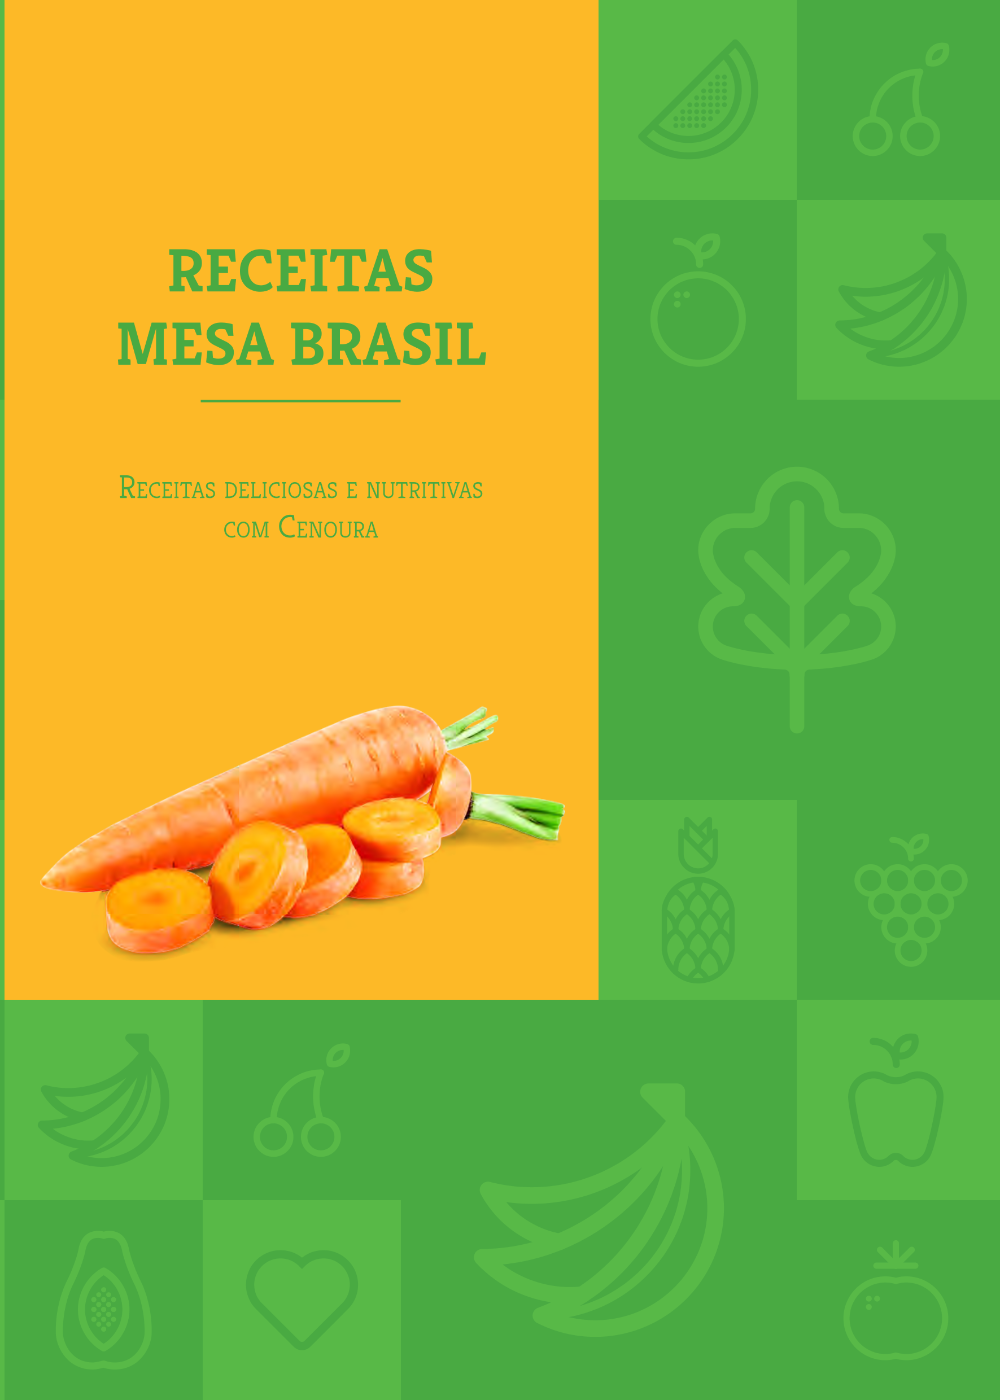 Receitas Mesa Brasil - Receitas deliciosas e nutritivas com cenoura